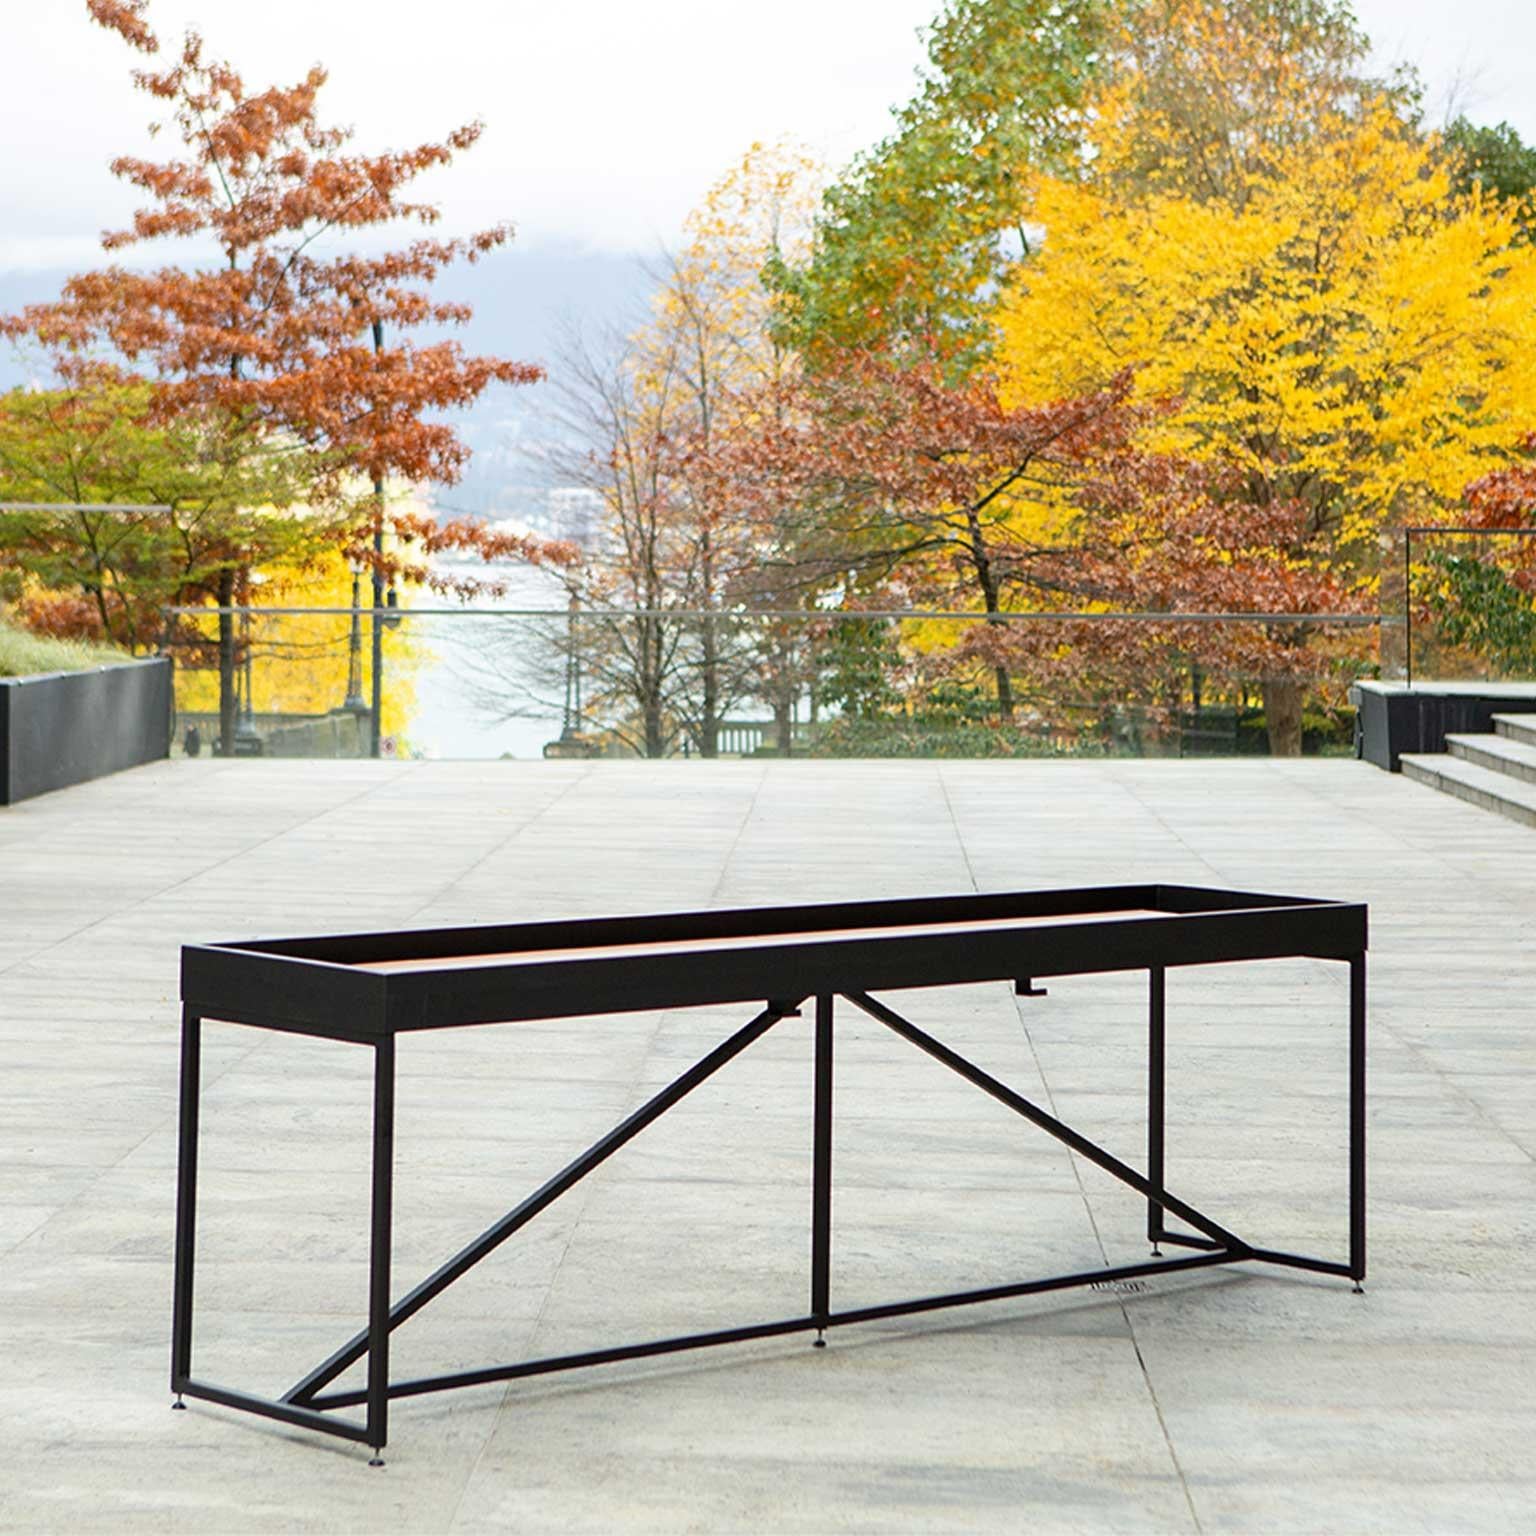 outdoor shuffle board table